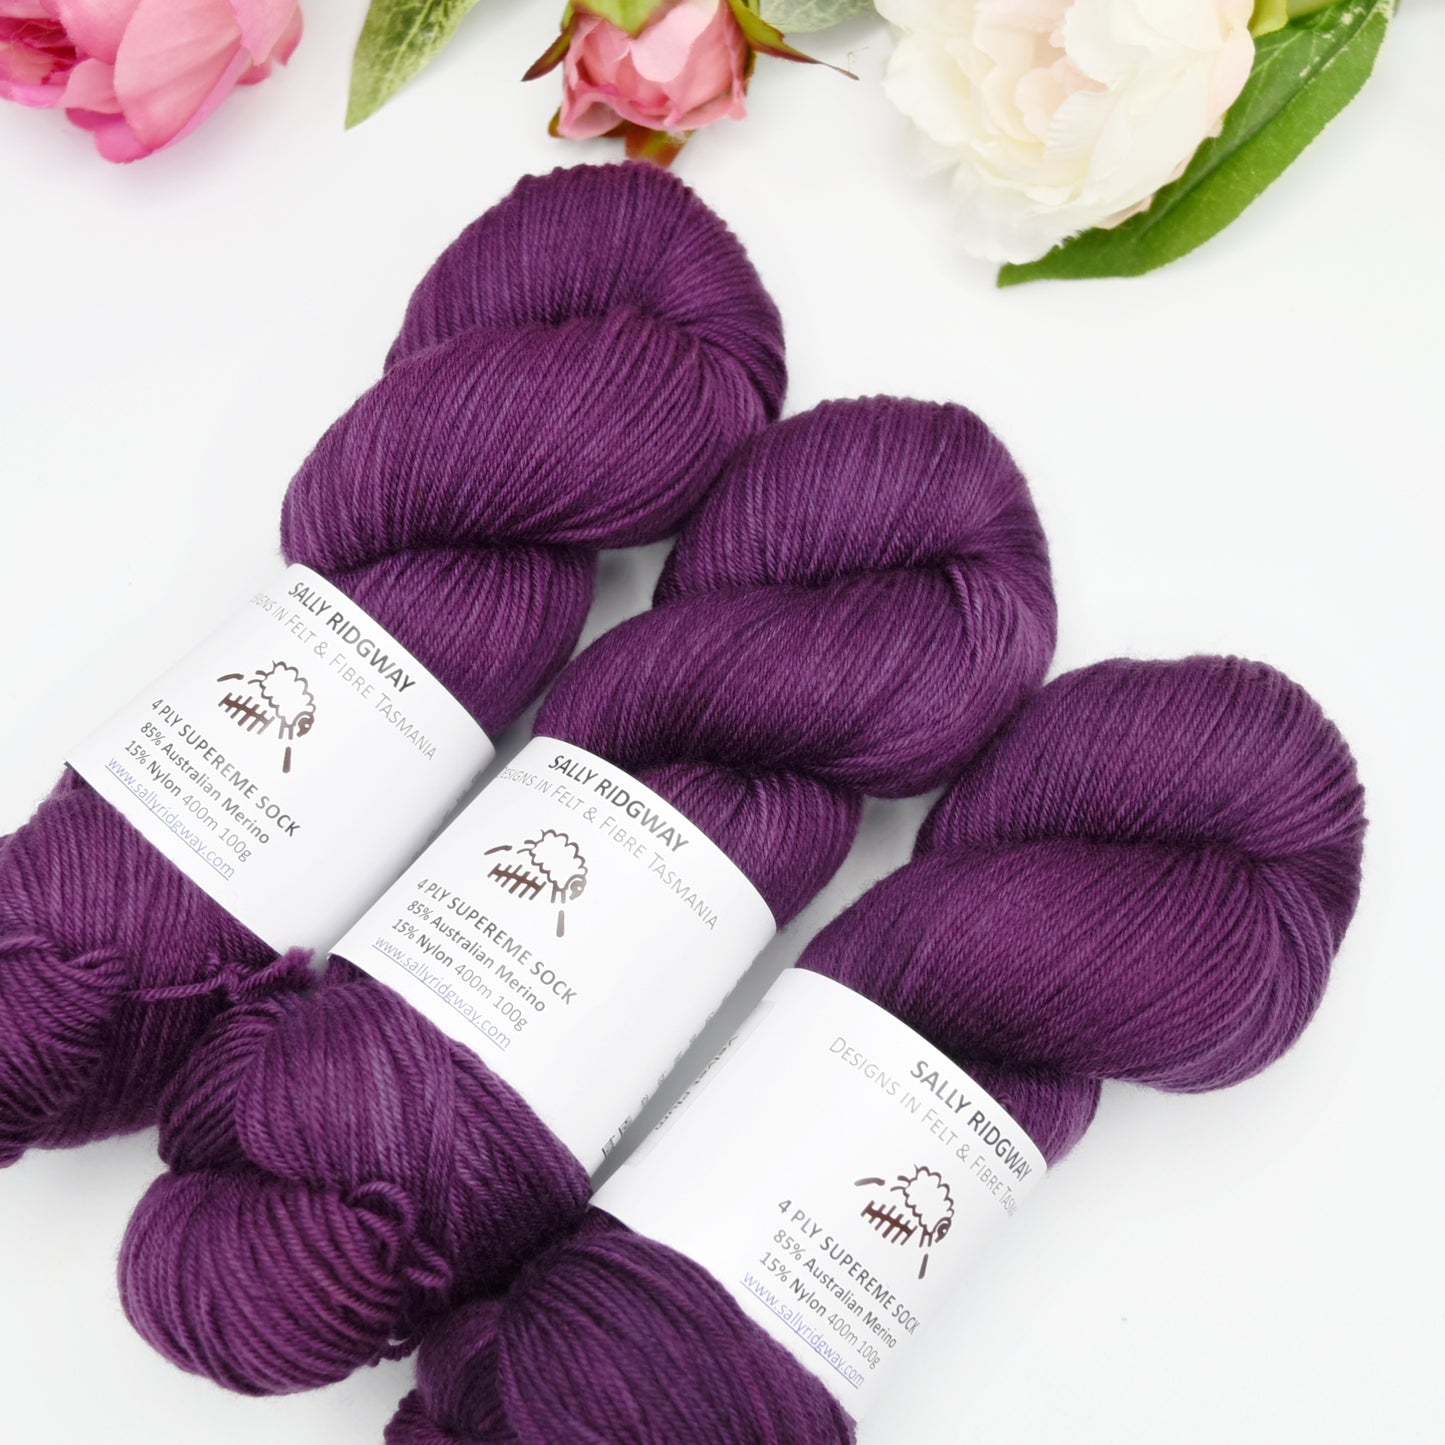 4 Ply Supreme Sock Knitting Yarn Hand Dyed Velvet Plum| Sock Yarn | Sally Ridgway | Shop Wool, Felt and Fibre Online